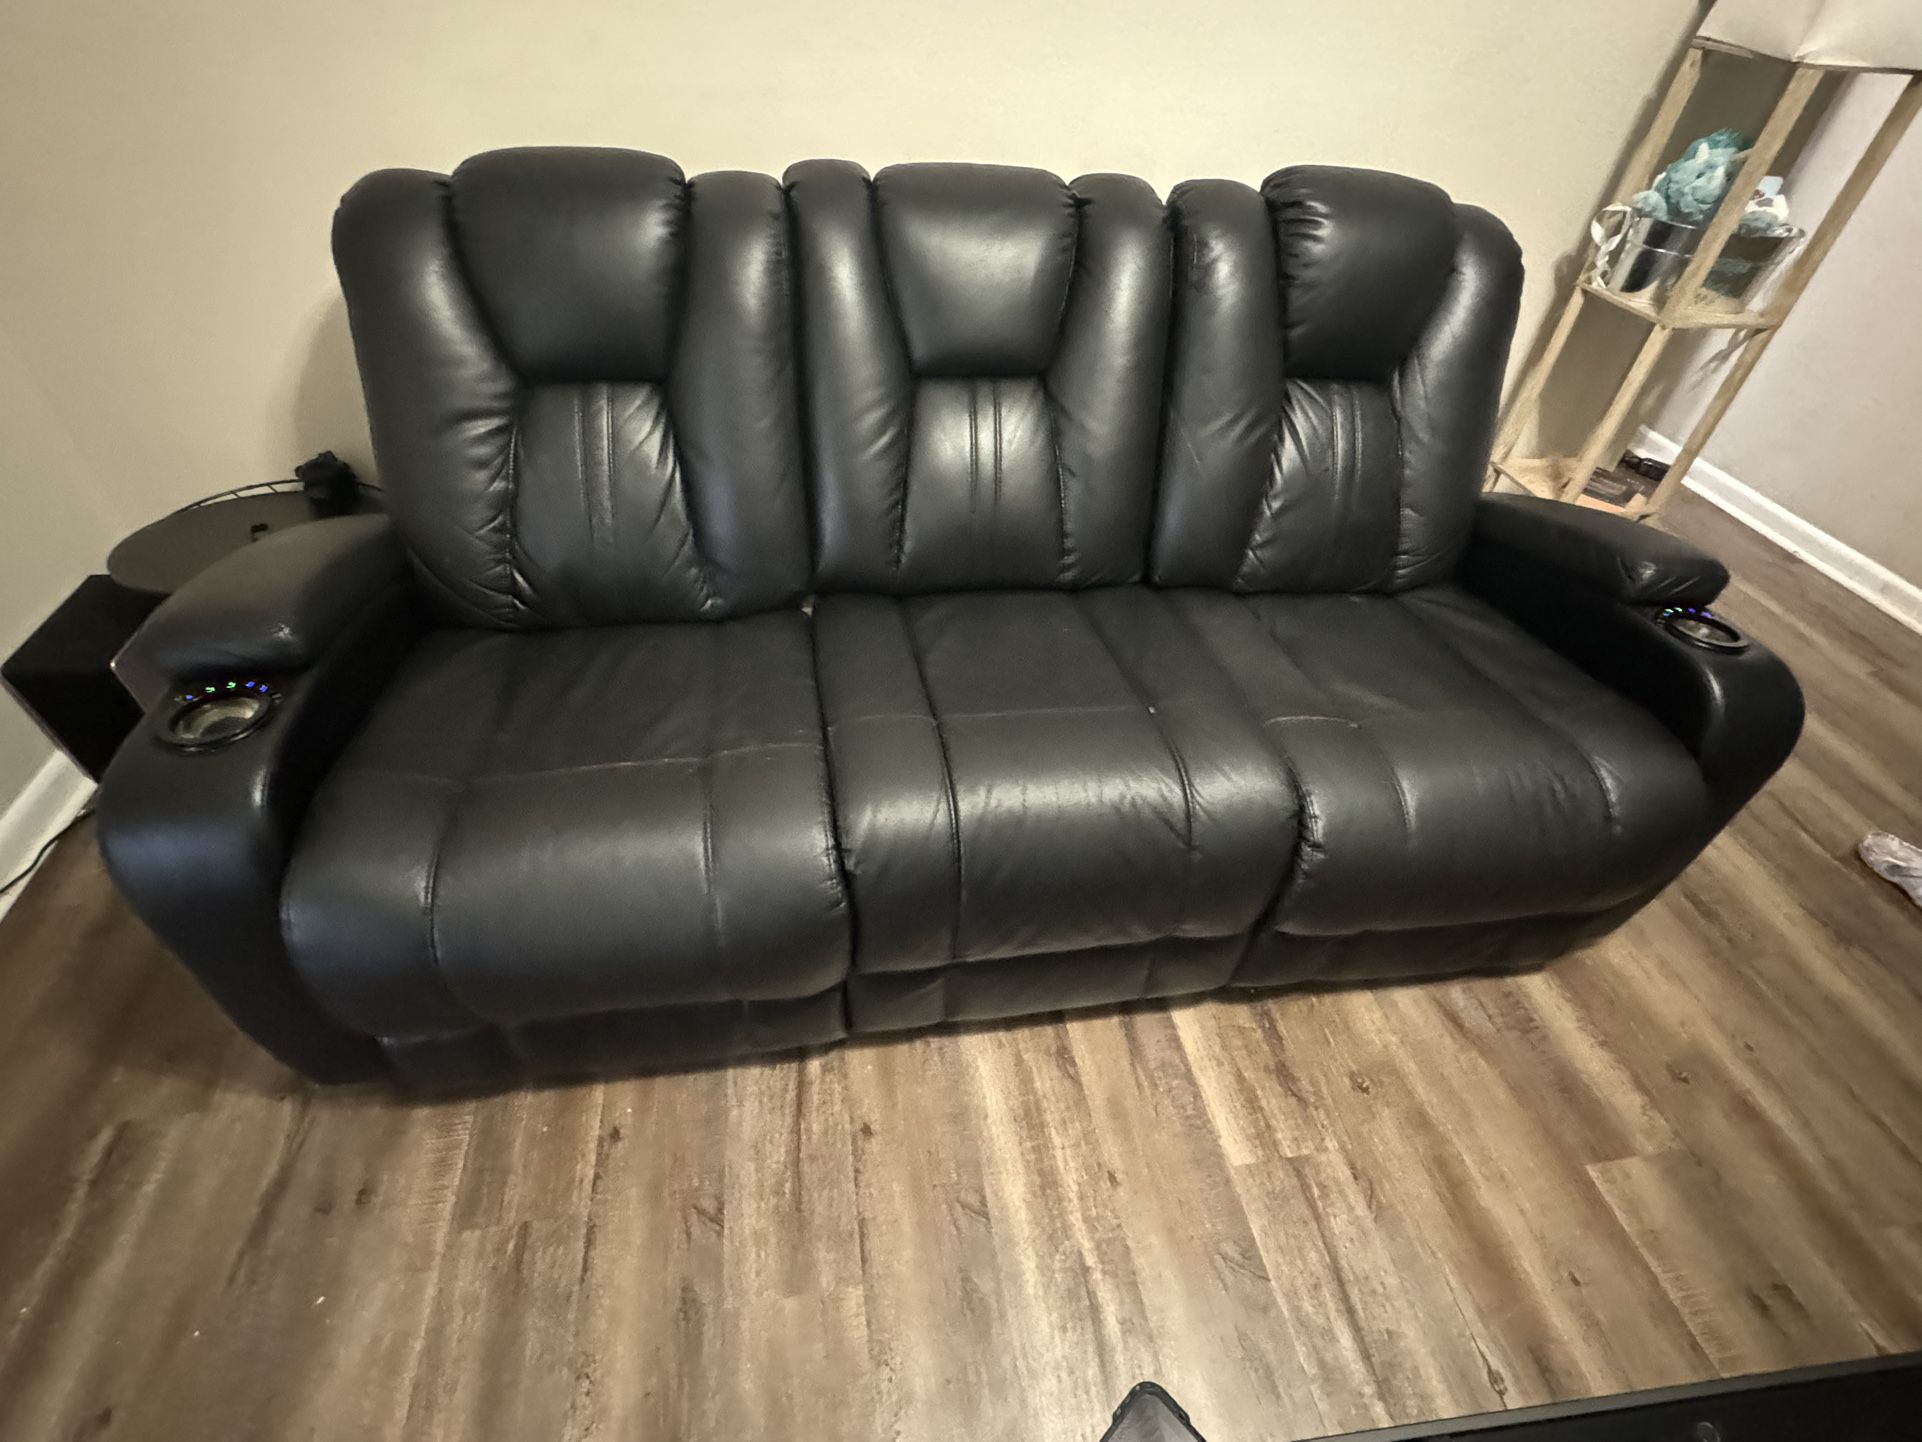 Sofa leather Reclining